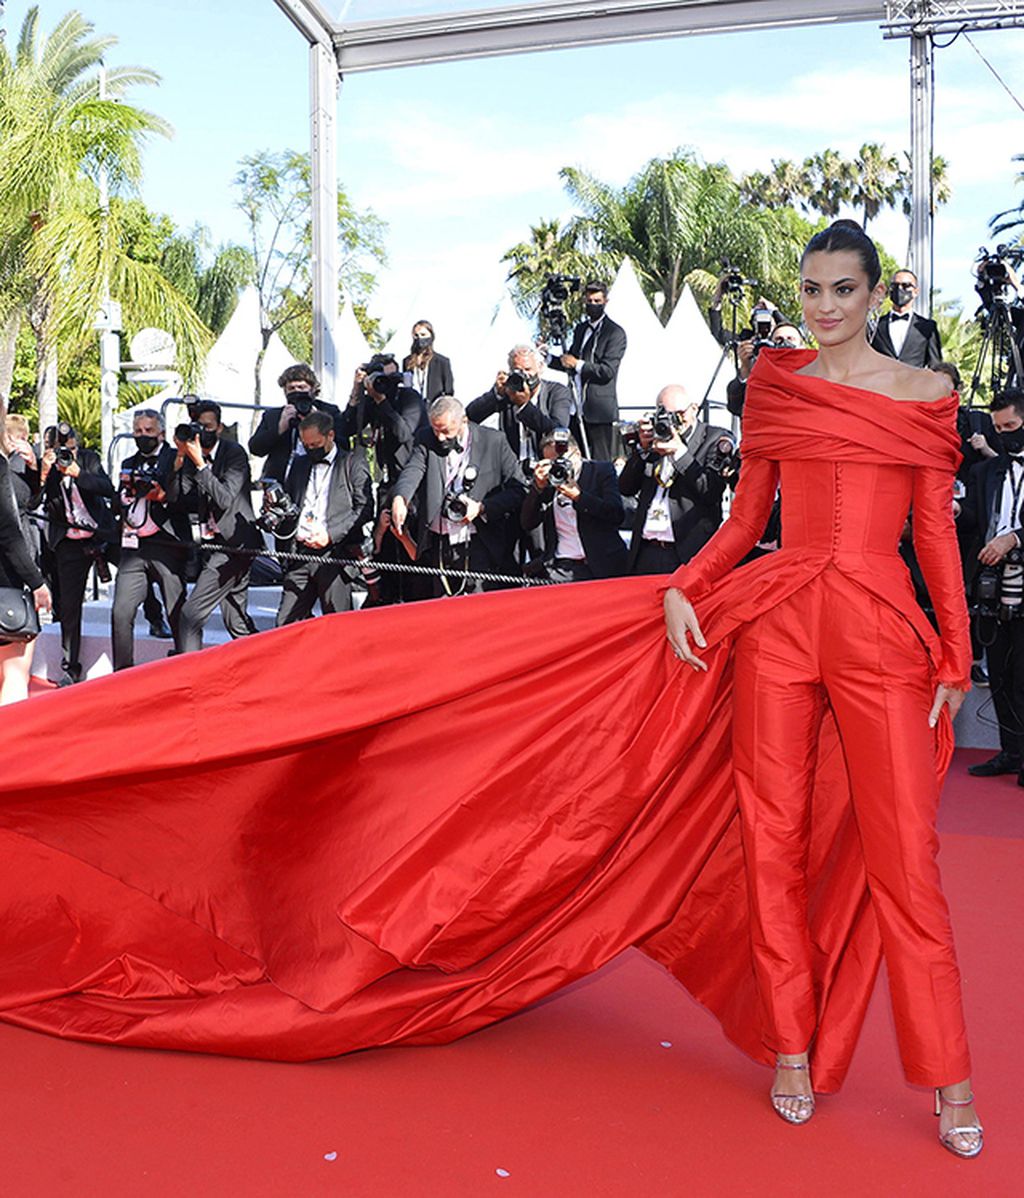 Los mejores looks de la alfombra roja del Festival de Cannes